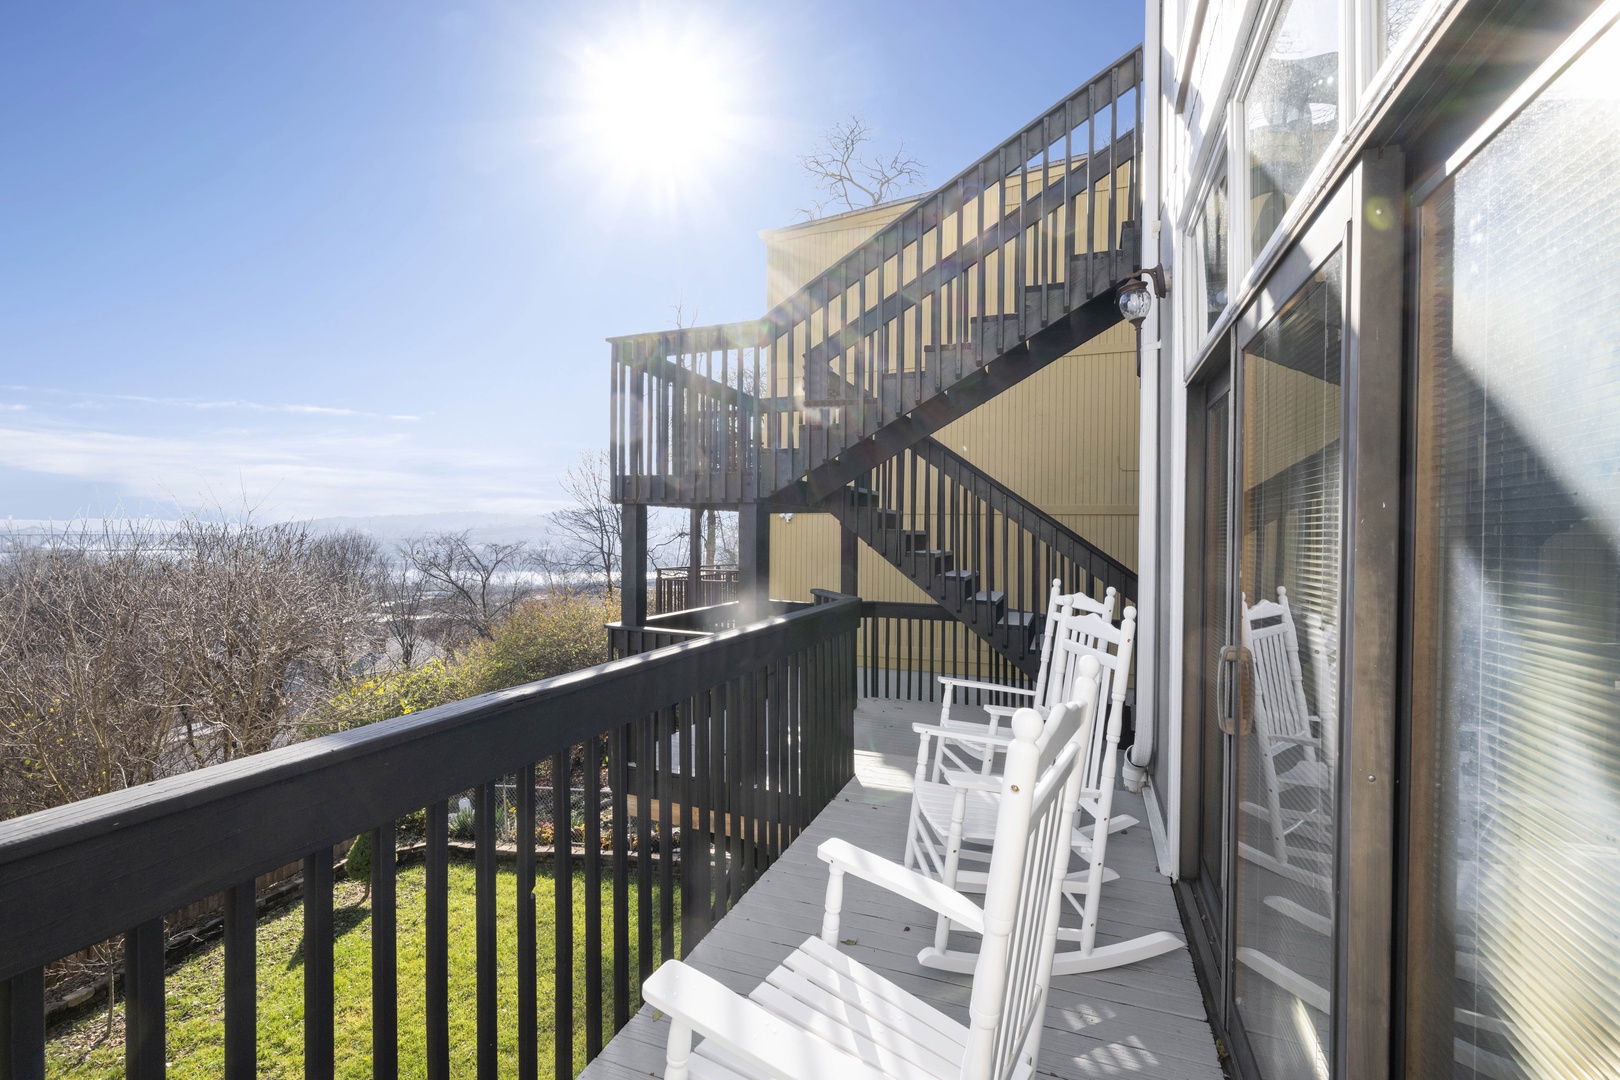 Savor the crisp breeze on the balcony with delightful views